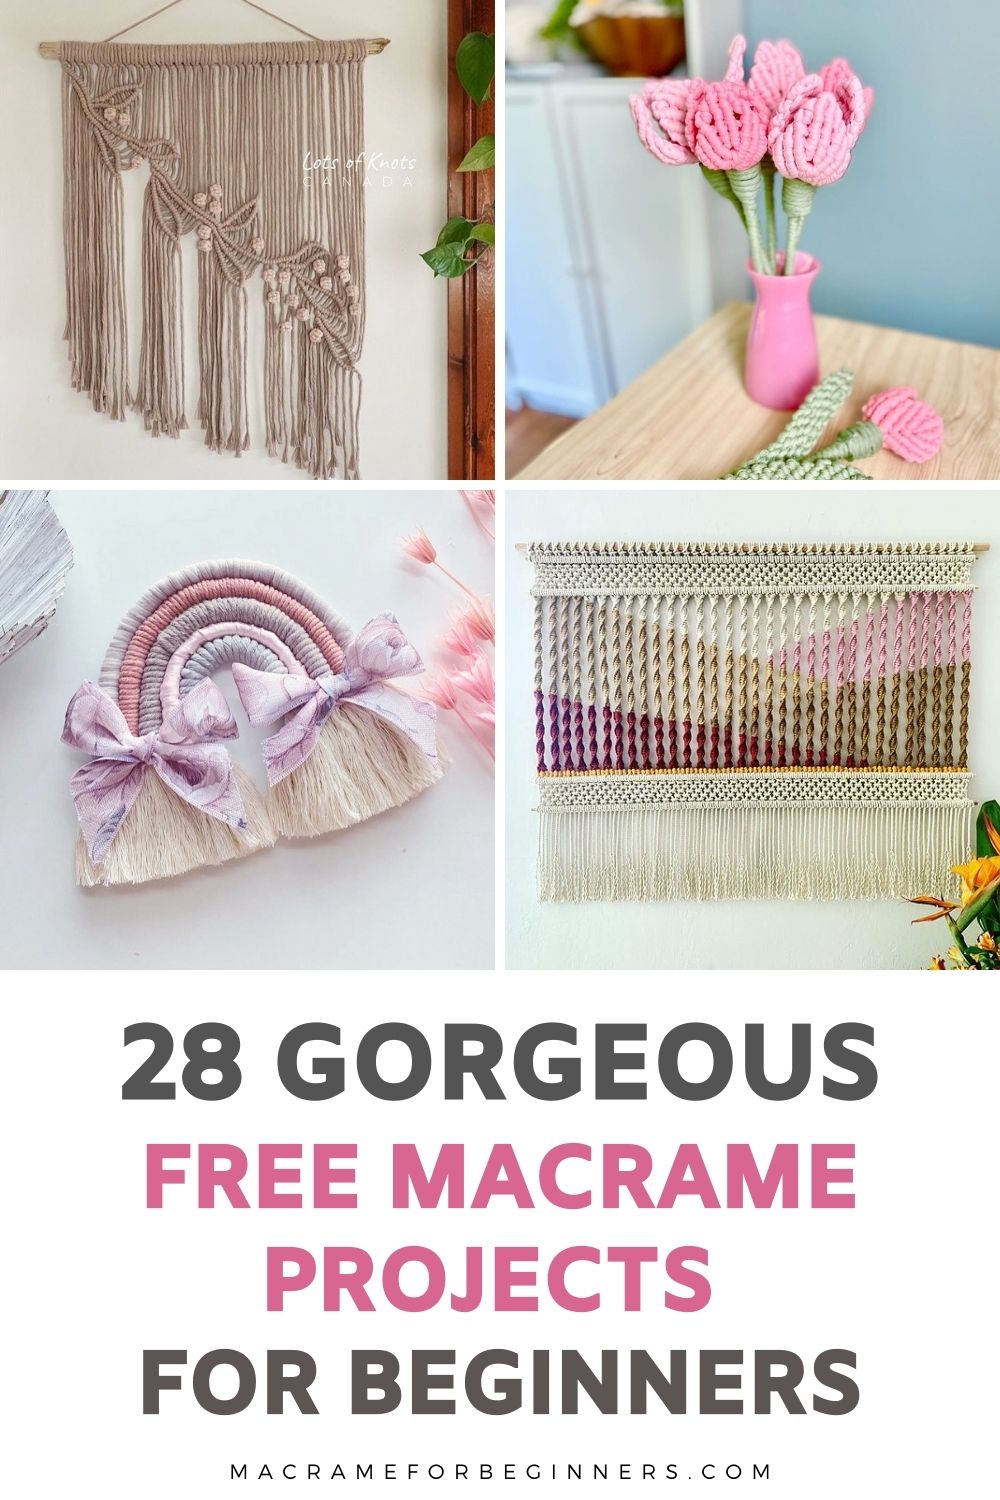 28 FREE Macrame Patterns To Celebrate 28K Facebook Group Members - Macrame for Beginners